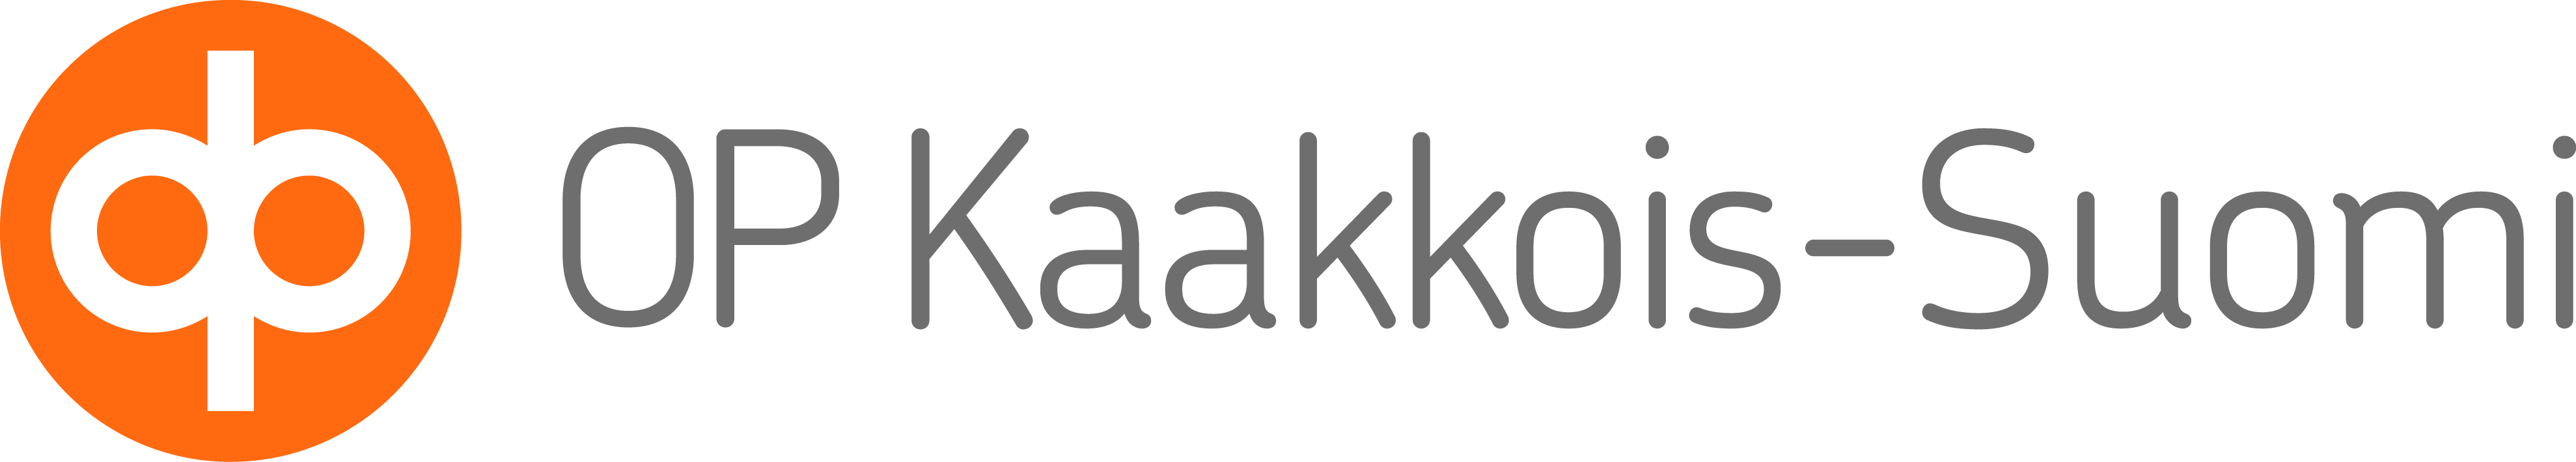 OP Kaakkois-Suomi -logo.